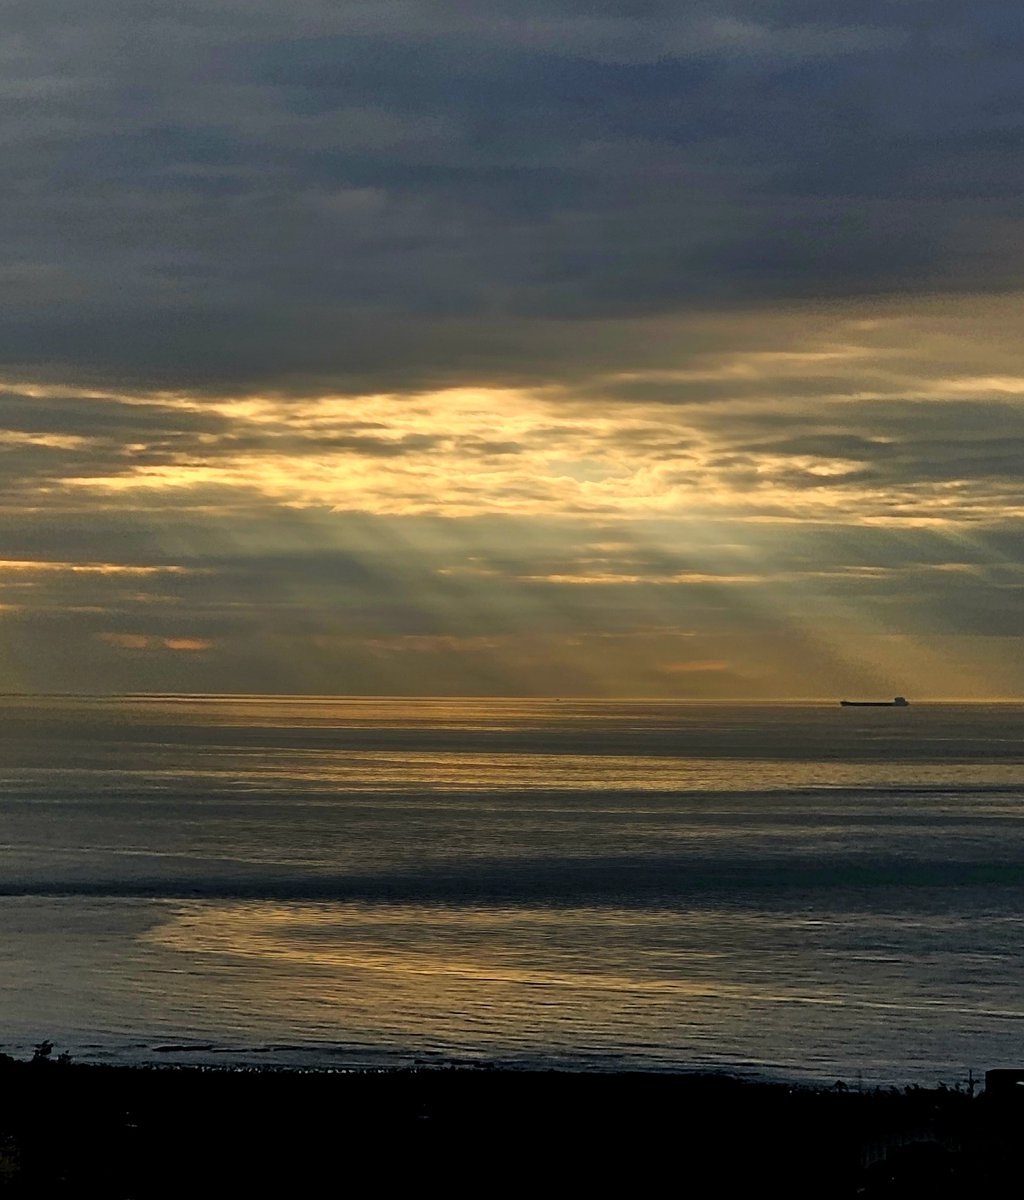 in fading sunlight
ocean currents slowly shift
watching life go by
#haiku #WalesHaikuJournal